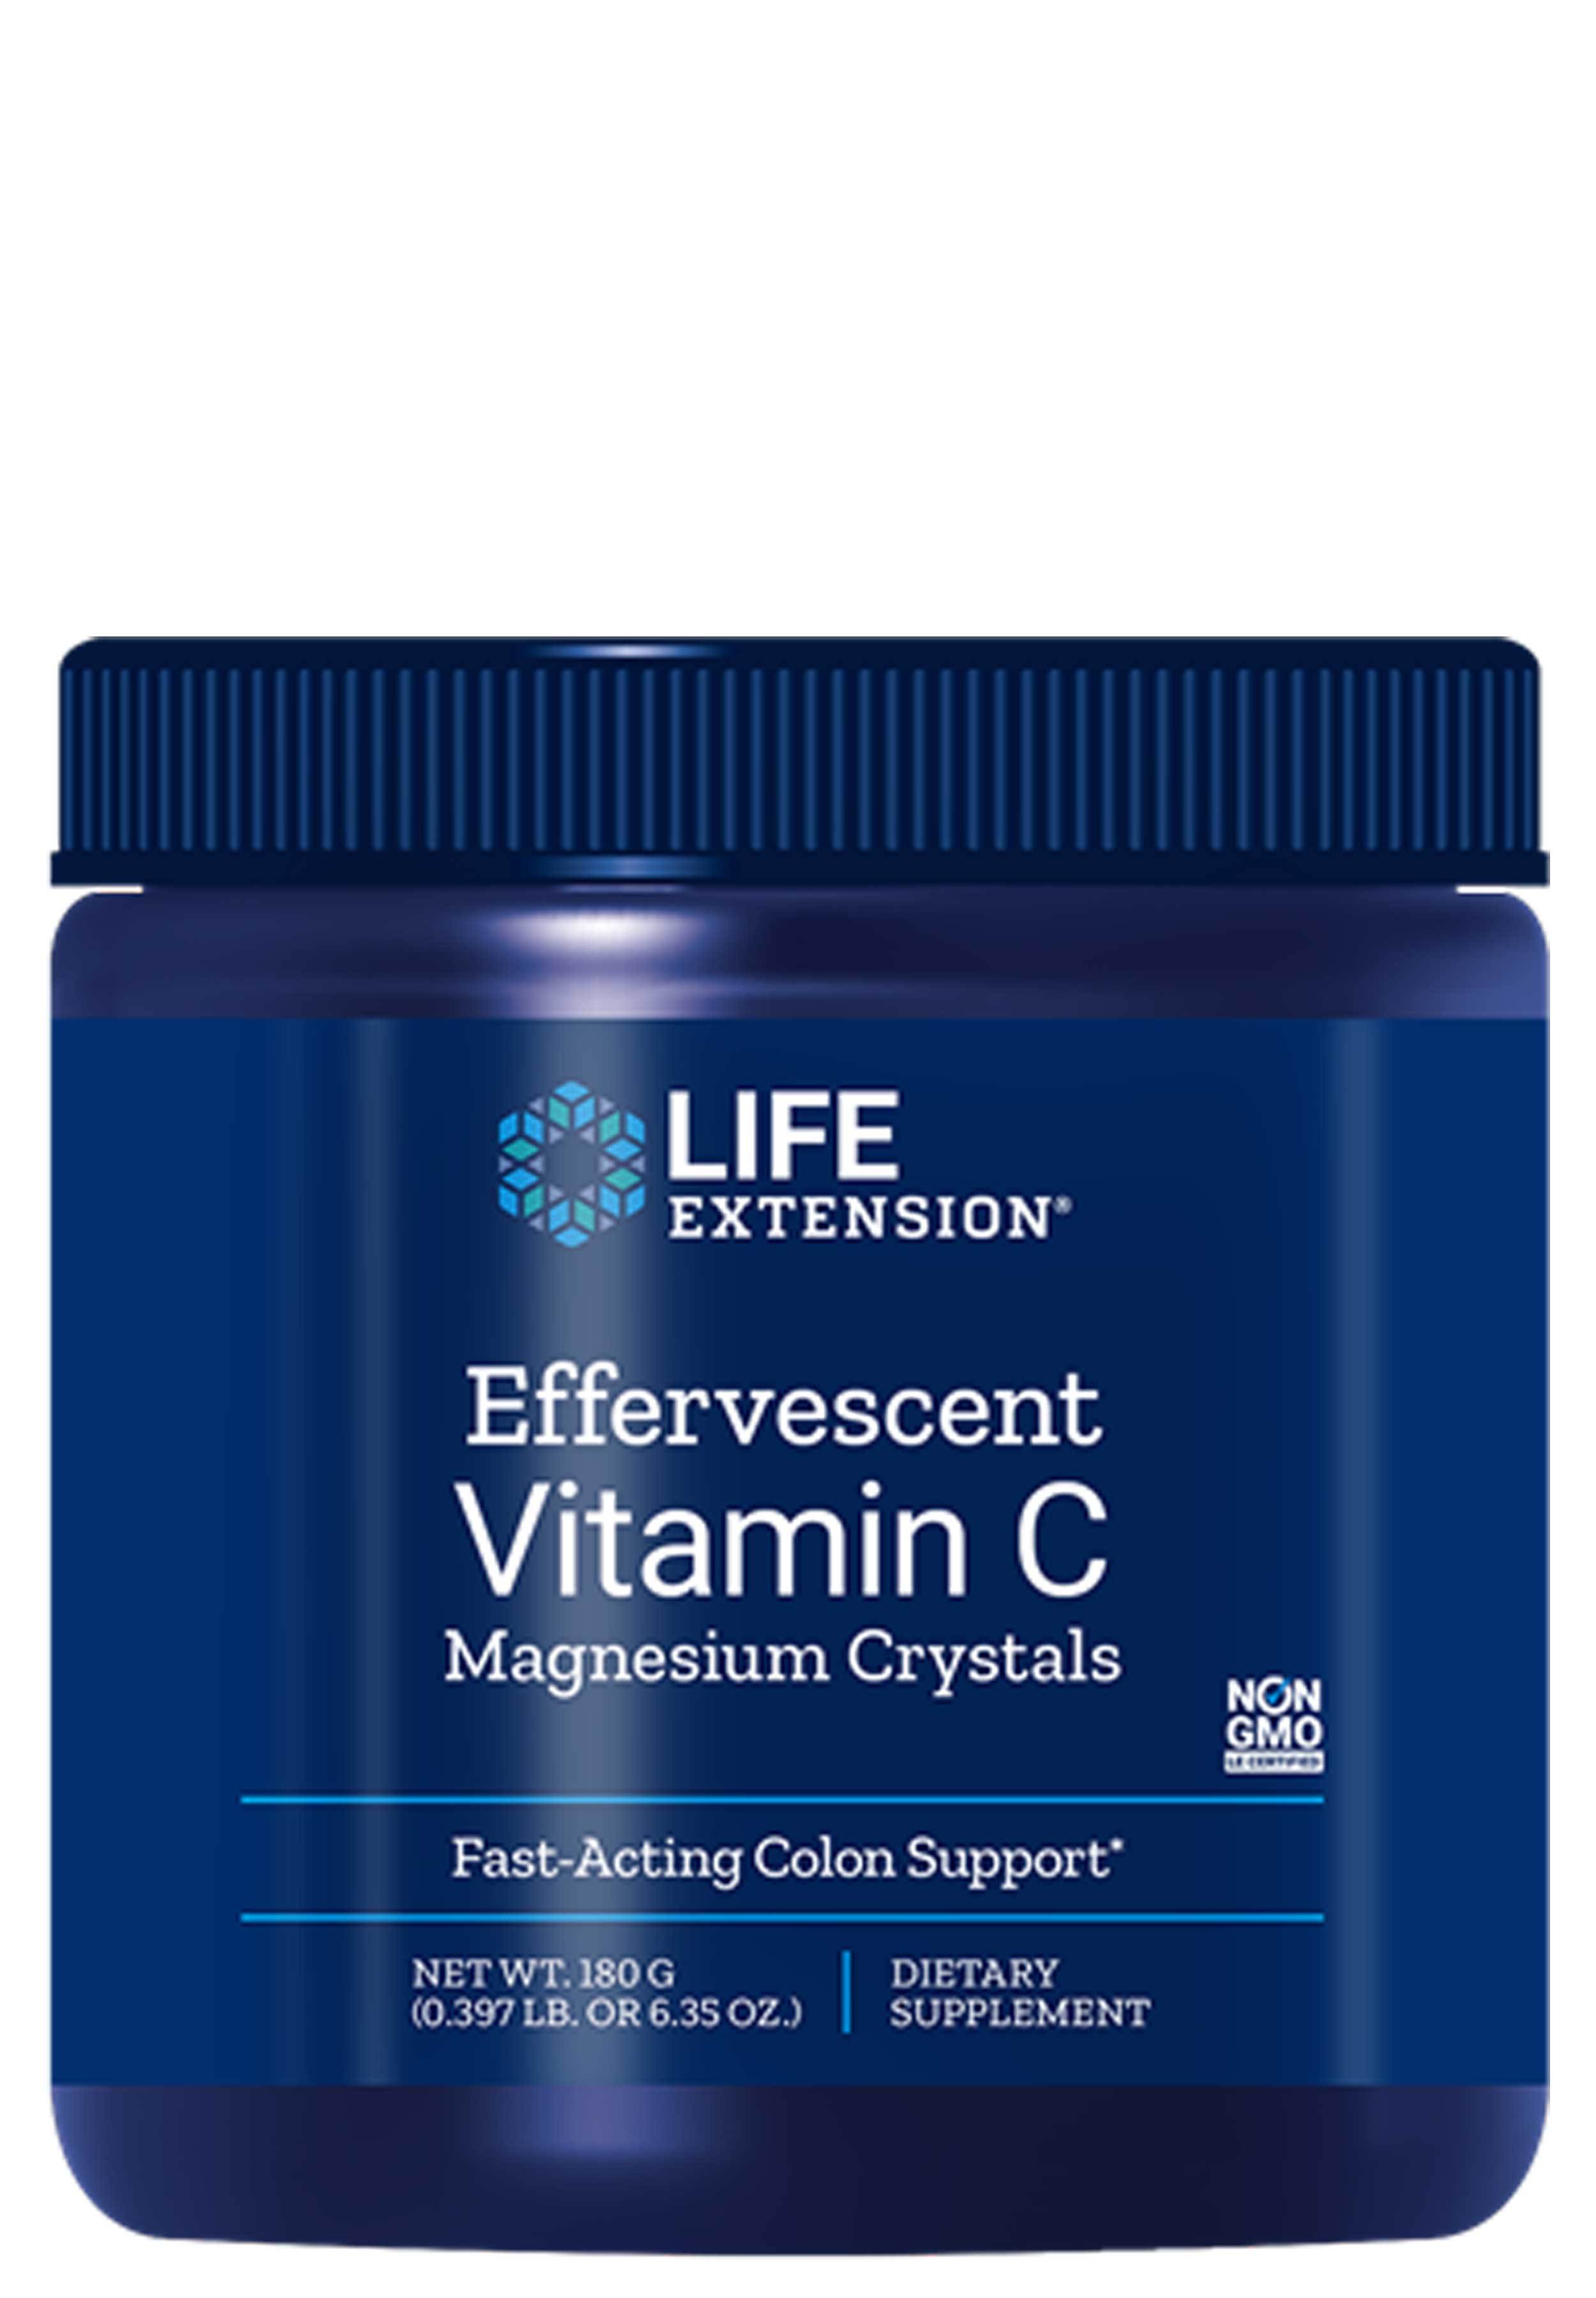 Life Extension Effervescent Vitamin C - Magnesium Crystals